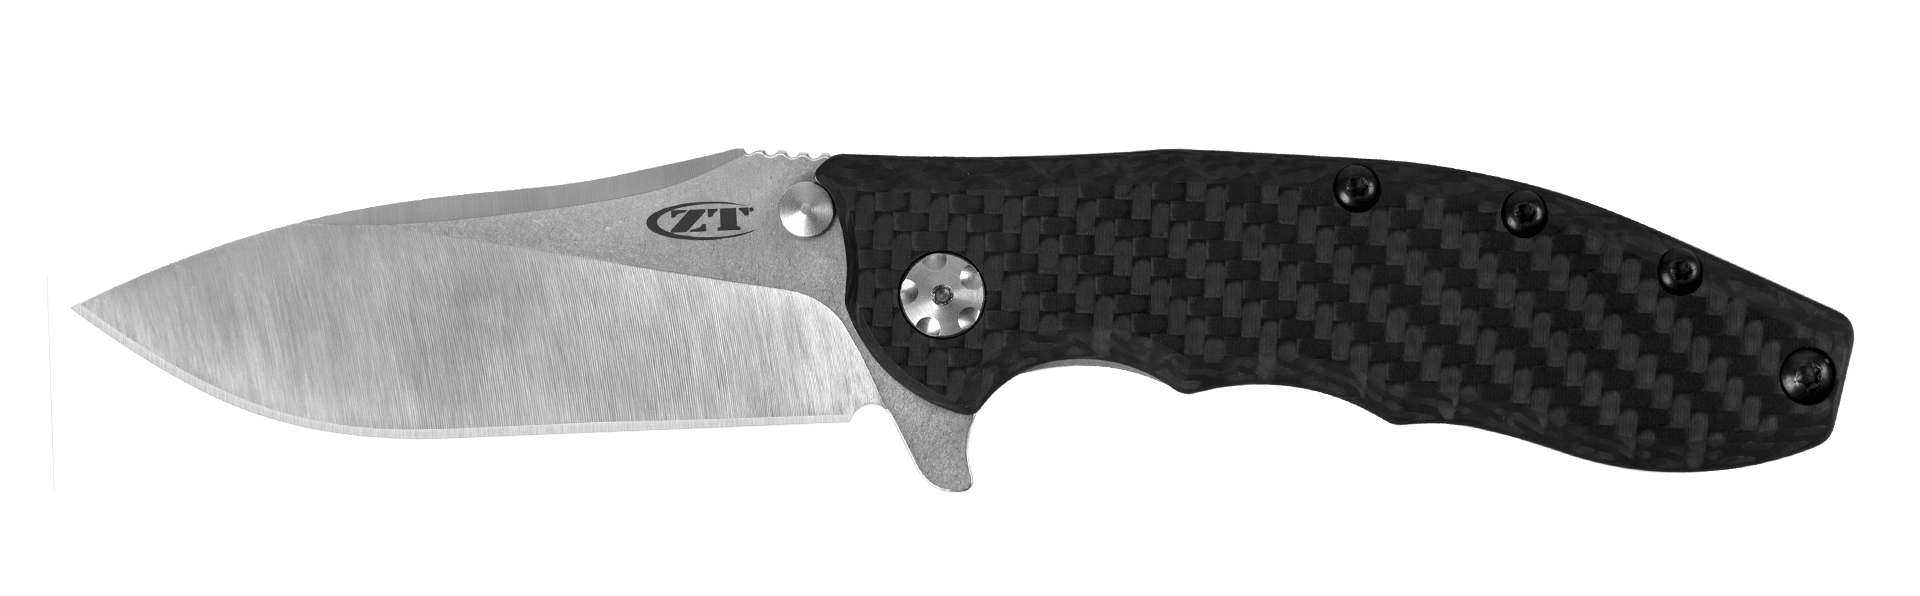 Zero Tolerance Hinderer Slicer Carbon Fiber Titanium Back SW S35VN - Knives.mx